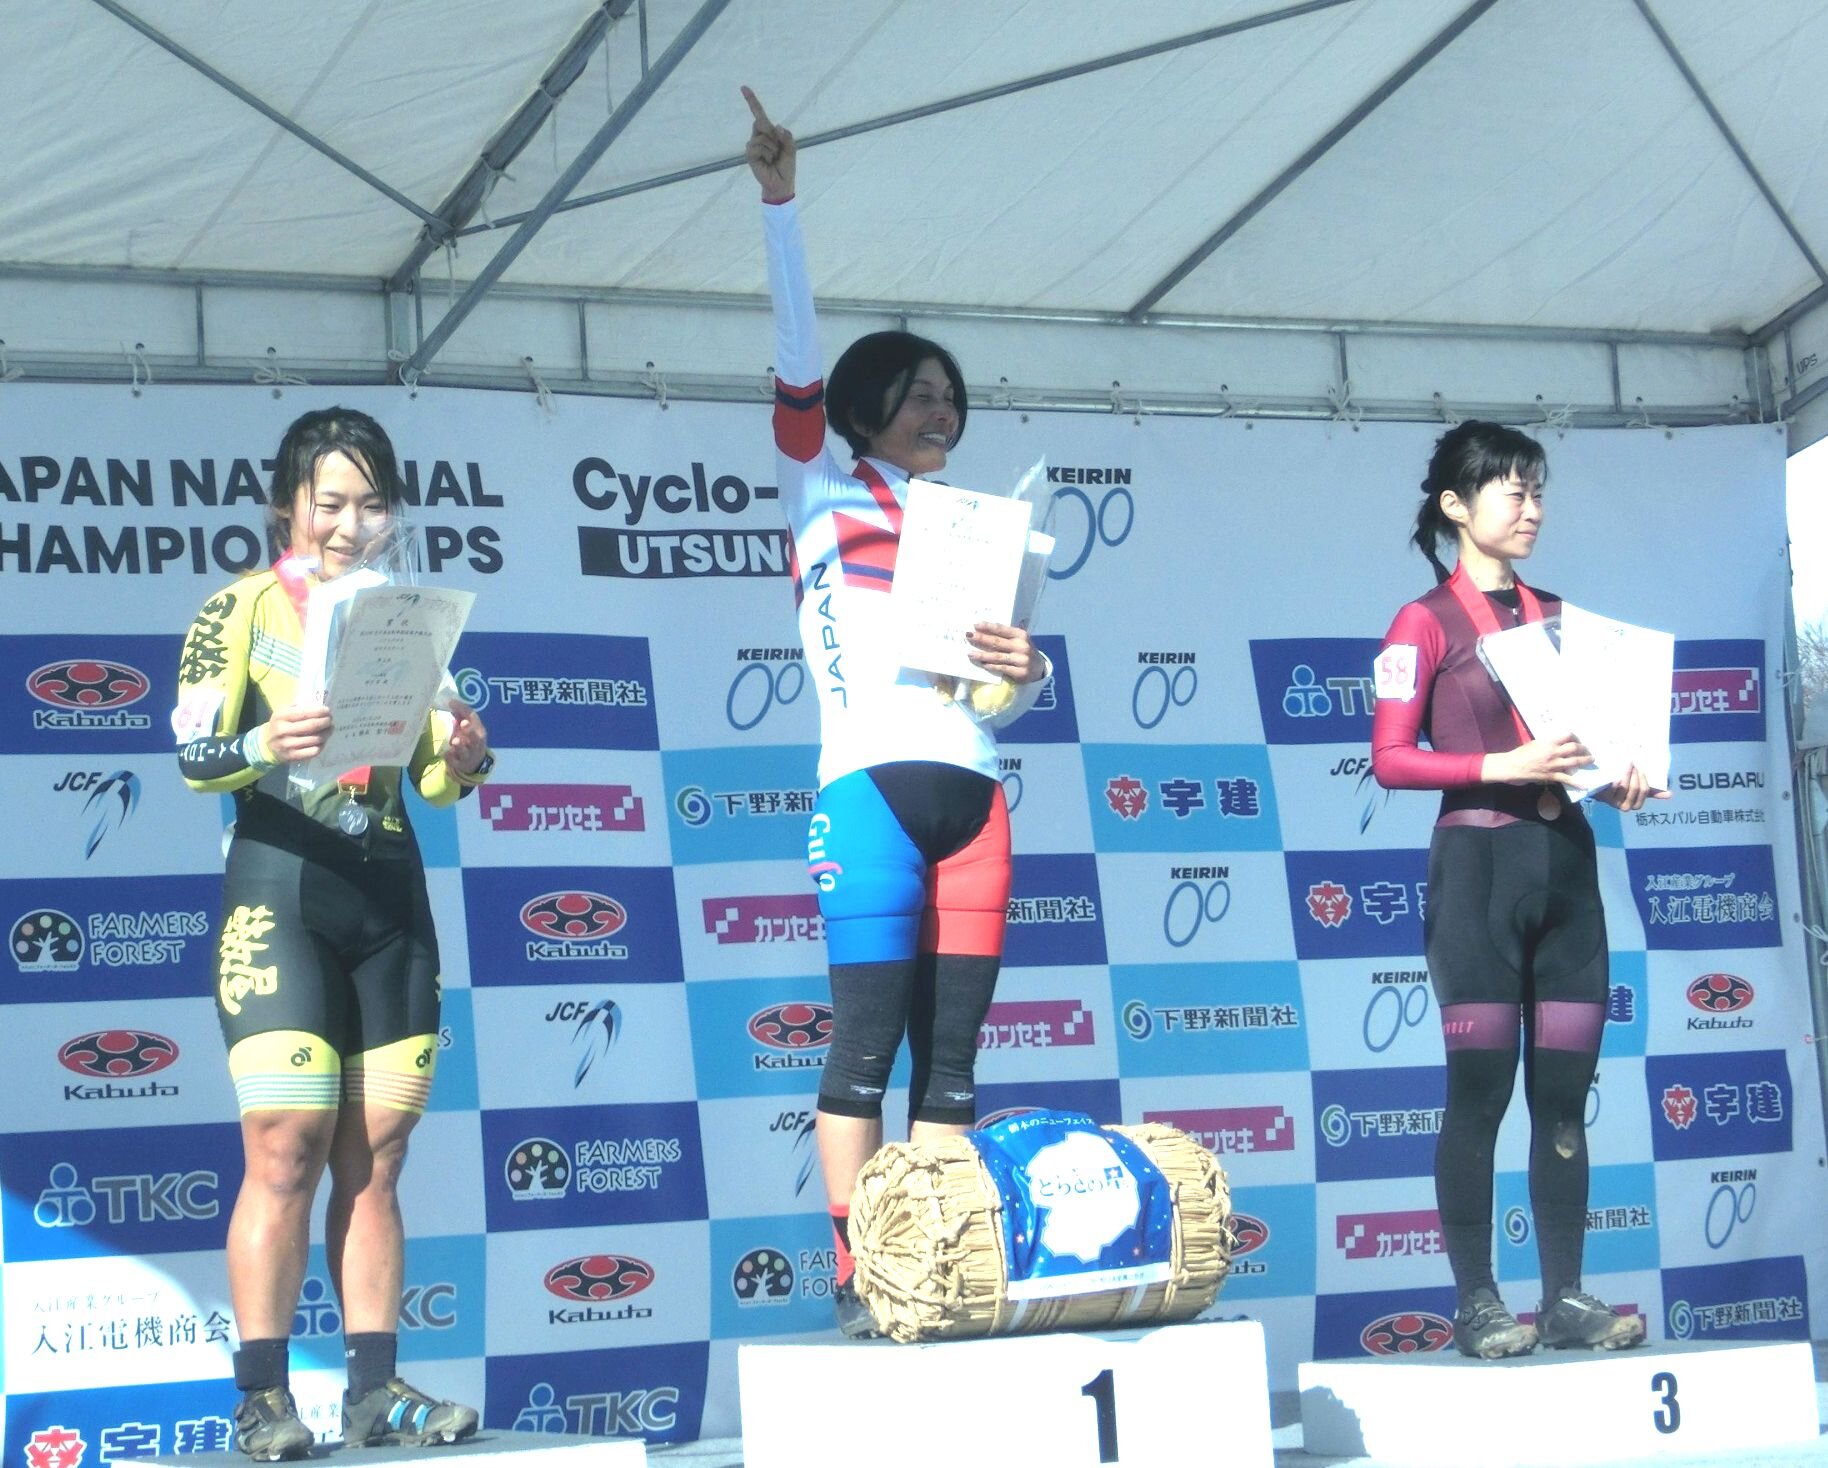 https://www.cyclocross.jp/news/CIMG7664.JPG